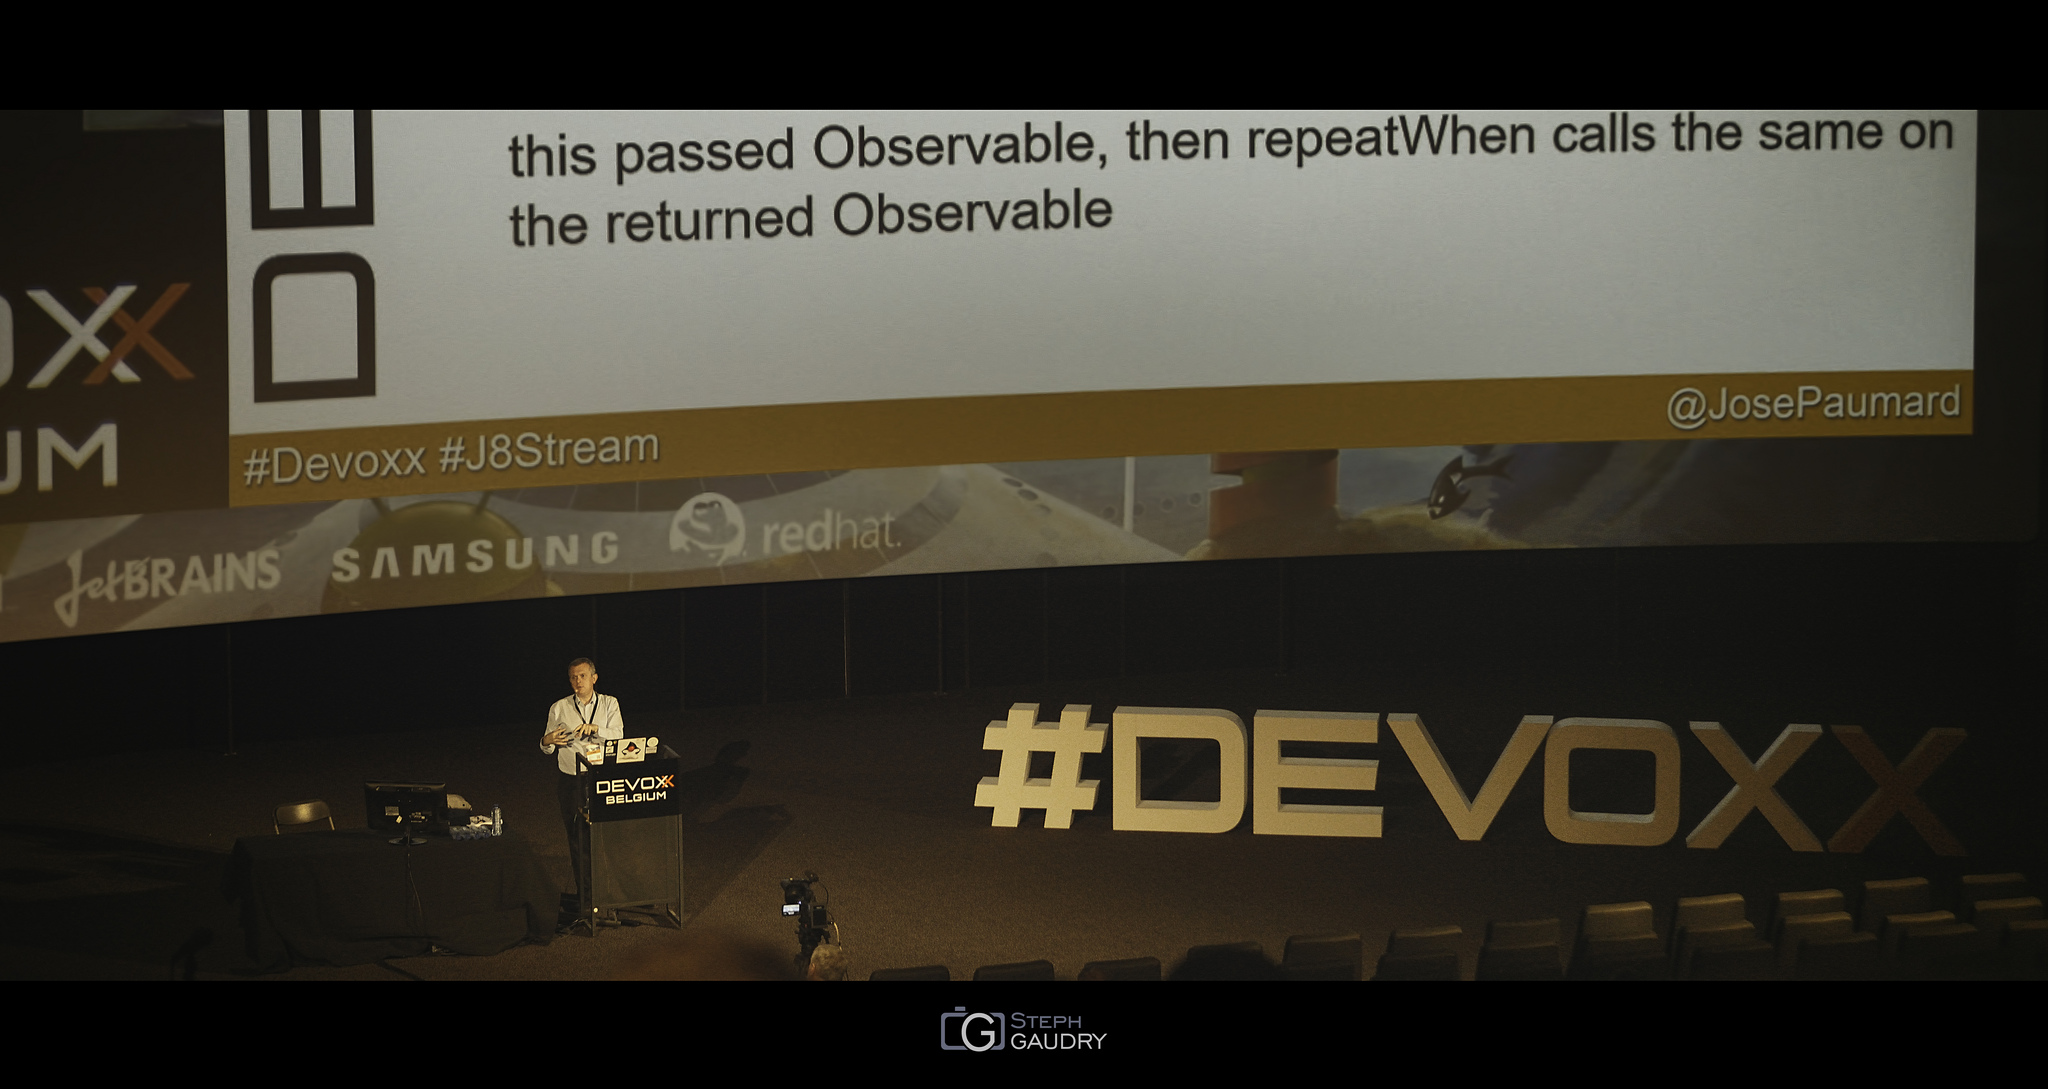 Devoxx2015 - Java 8 Stream and RxJava [Klik om de diavoorstelling te starten]